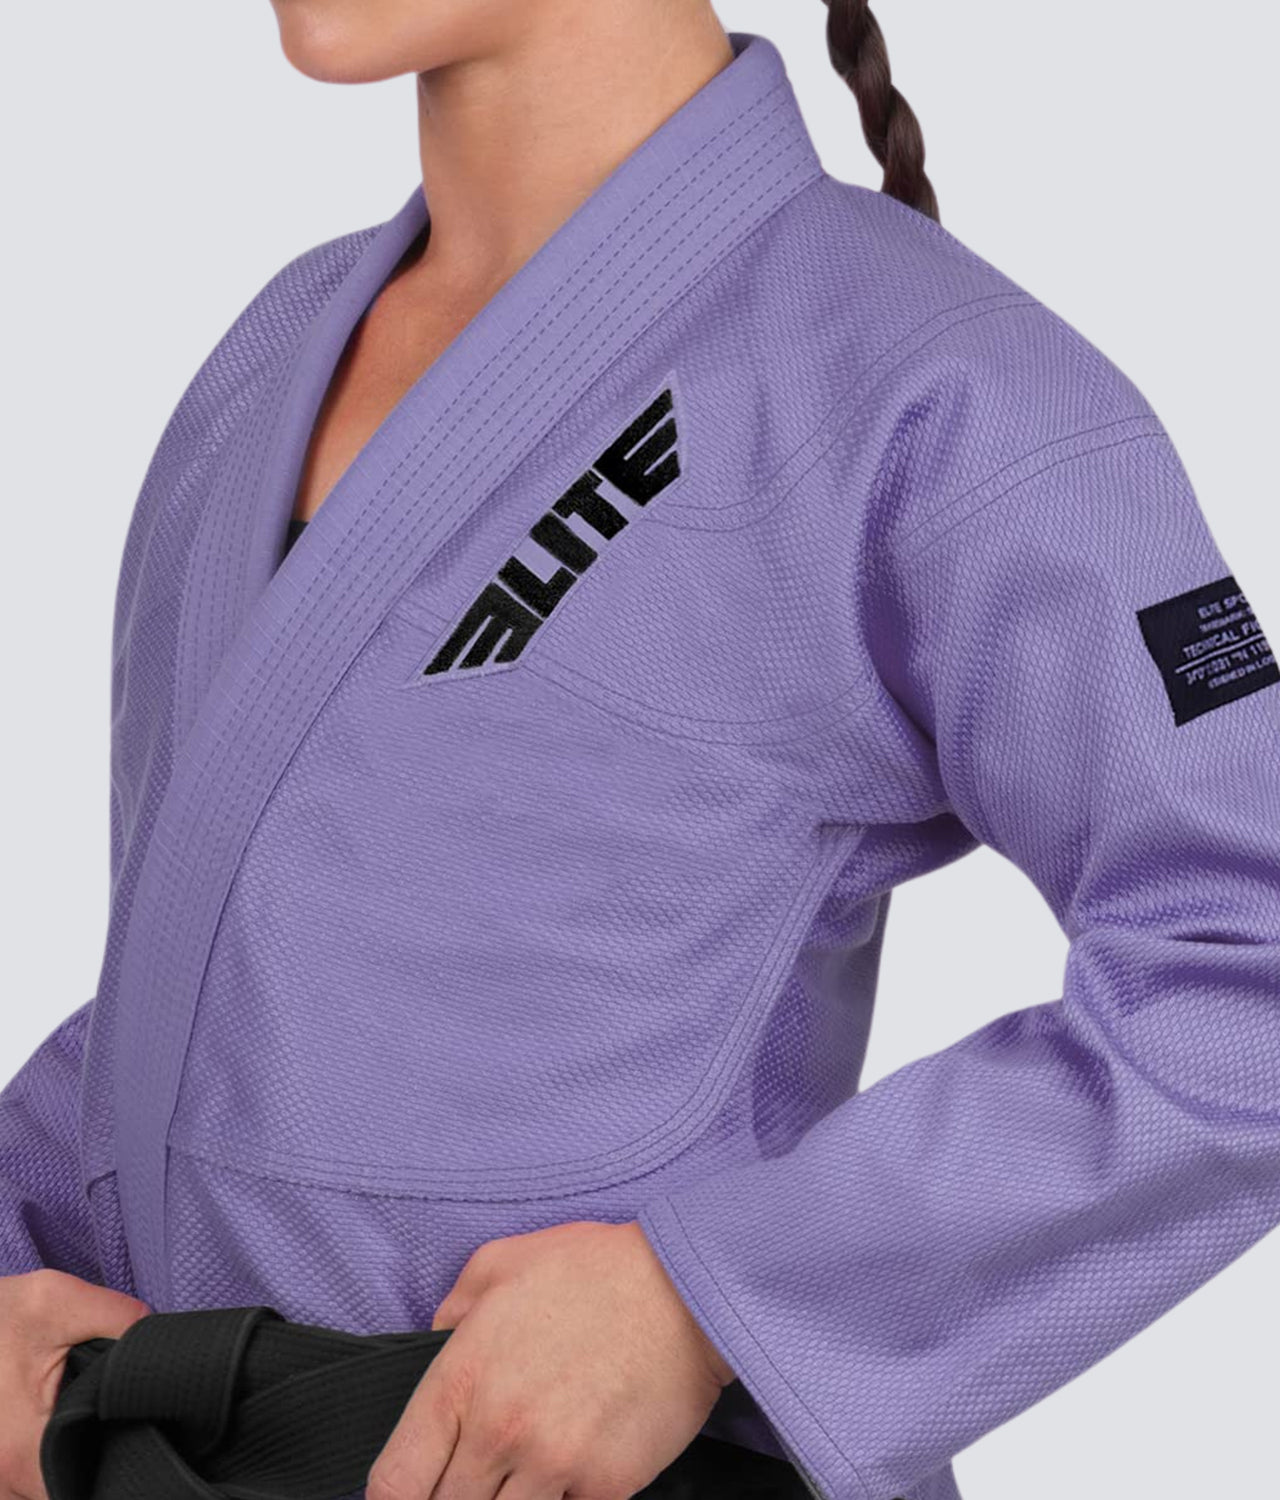 Elite Sports Women's Core Purple Brazilian Jiu Jitsu BJJ Gi Closeup View